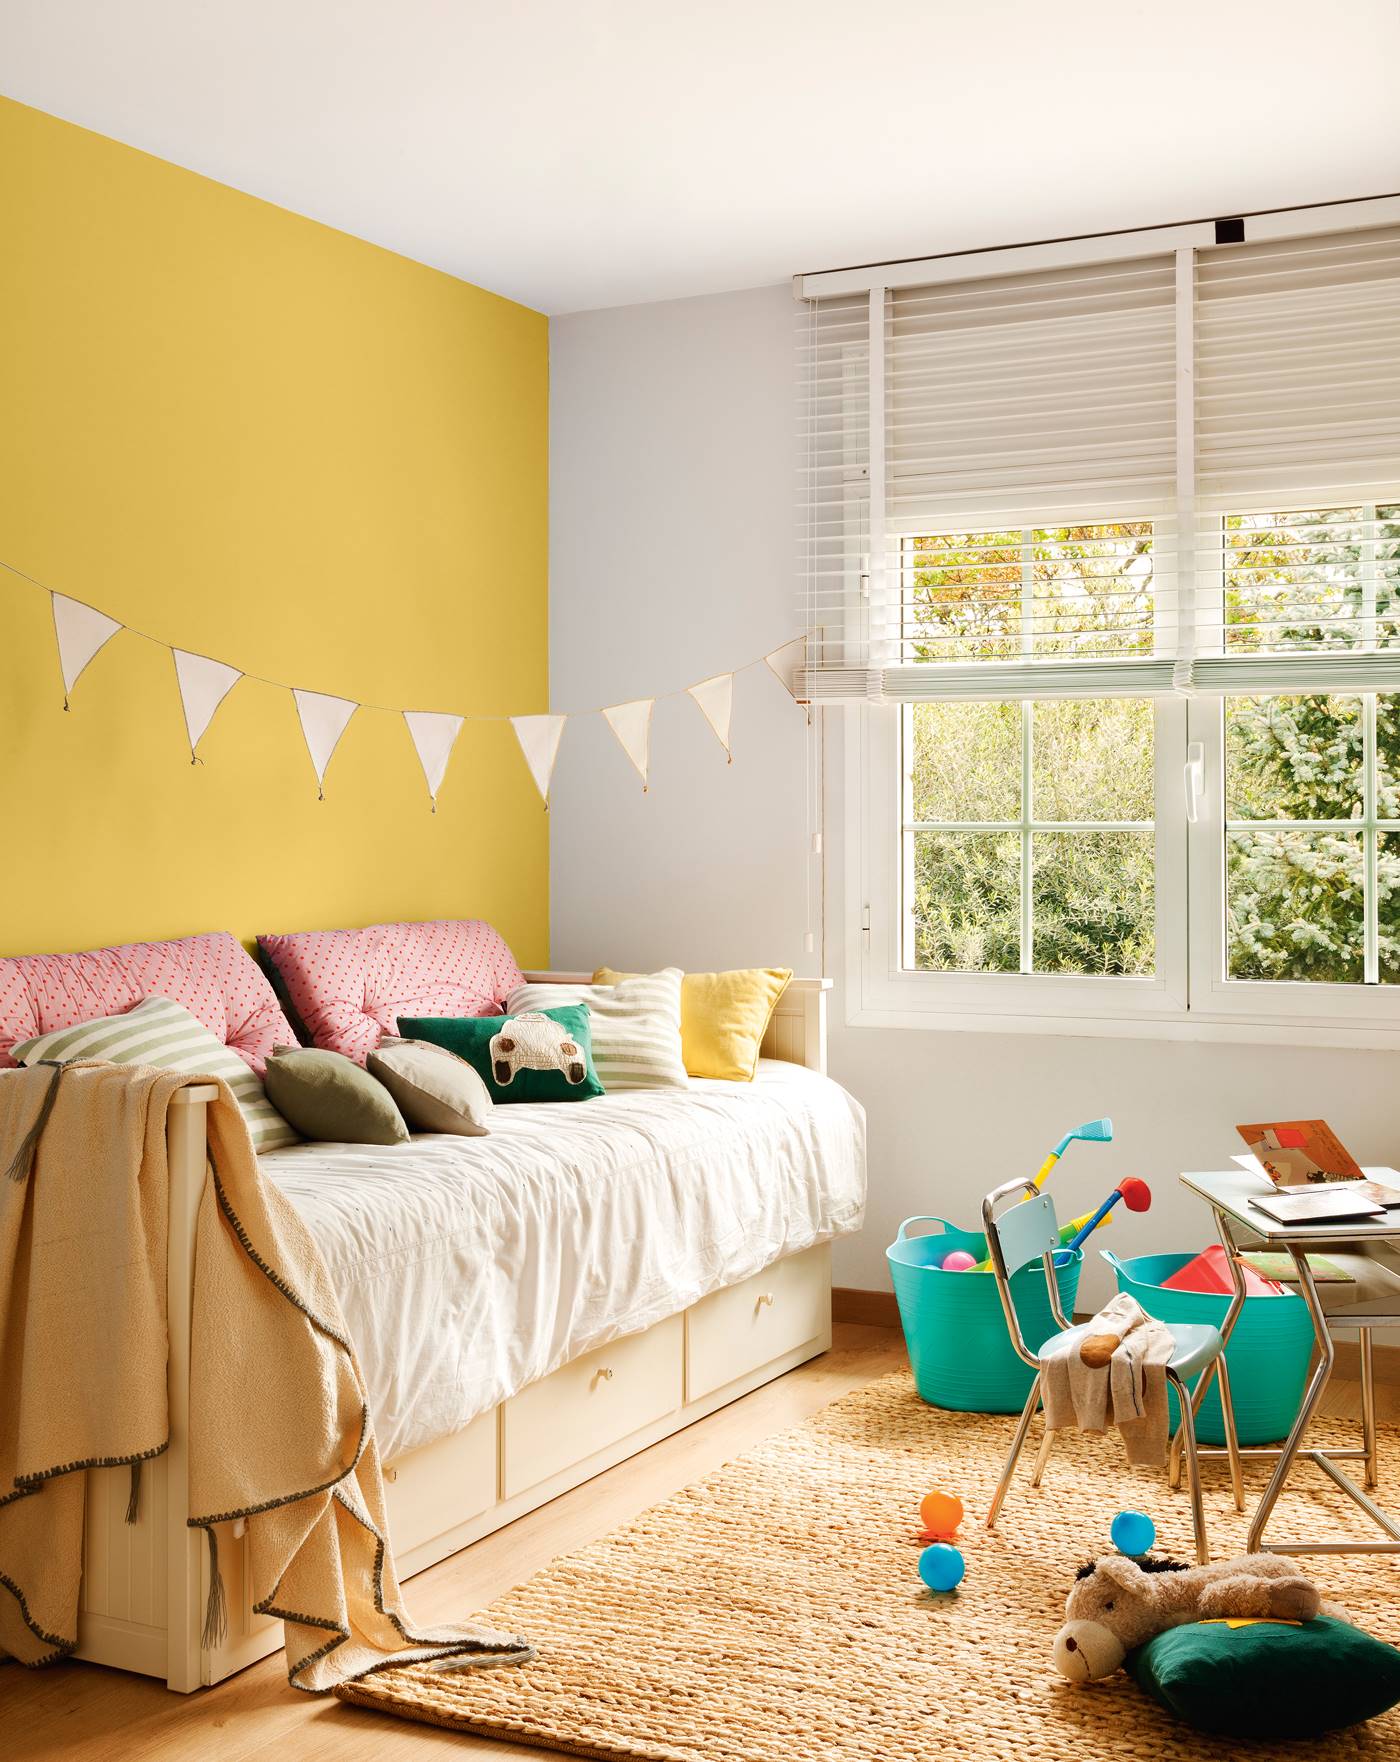 Habitación infantil con pared pintada en color amarillo